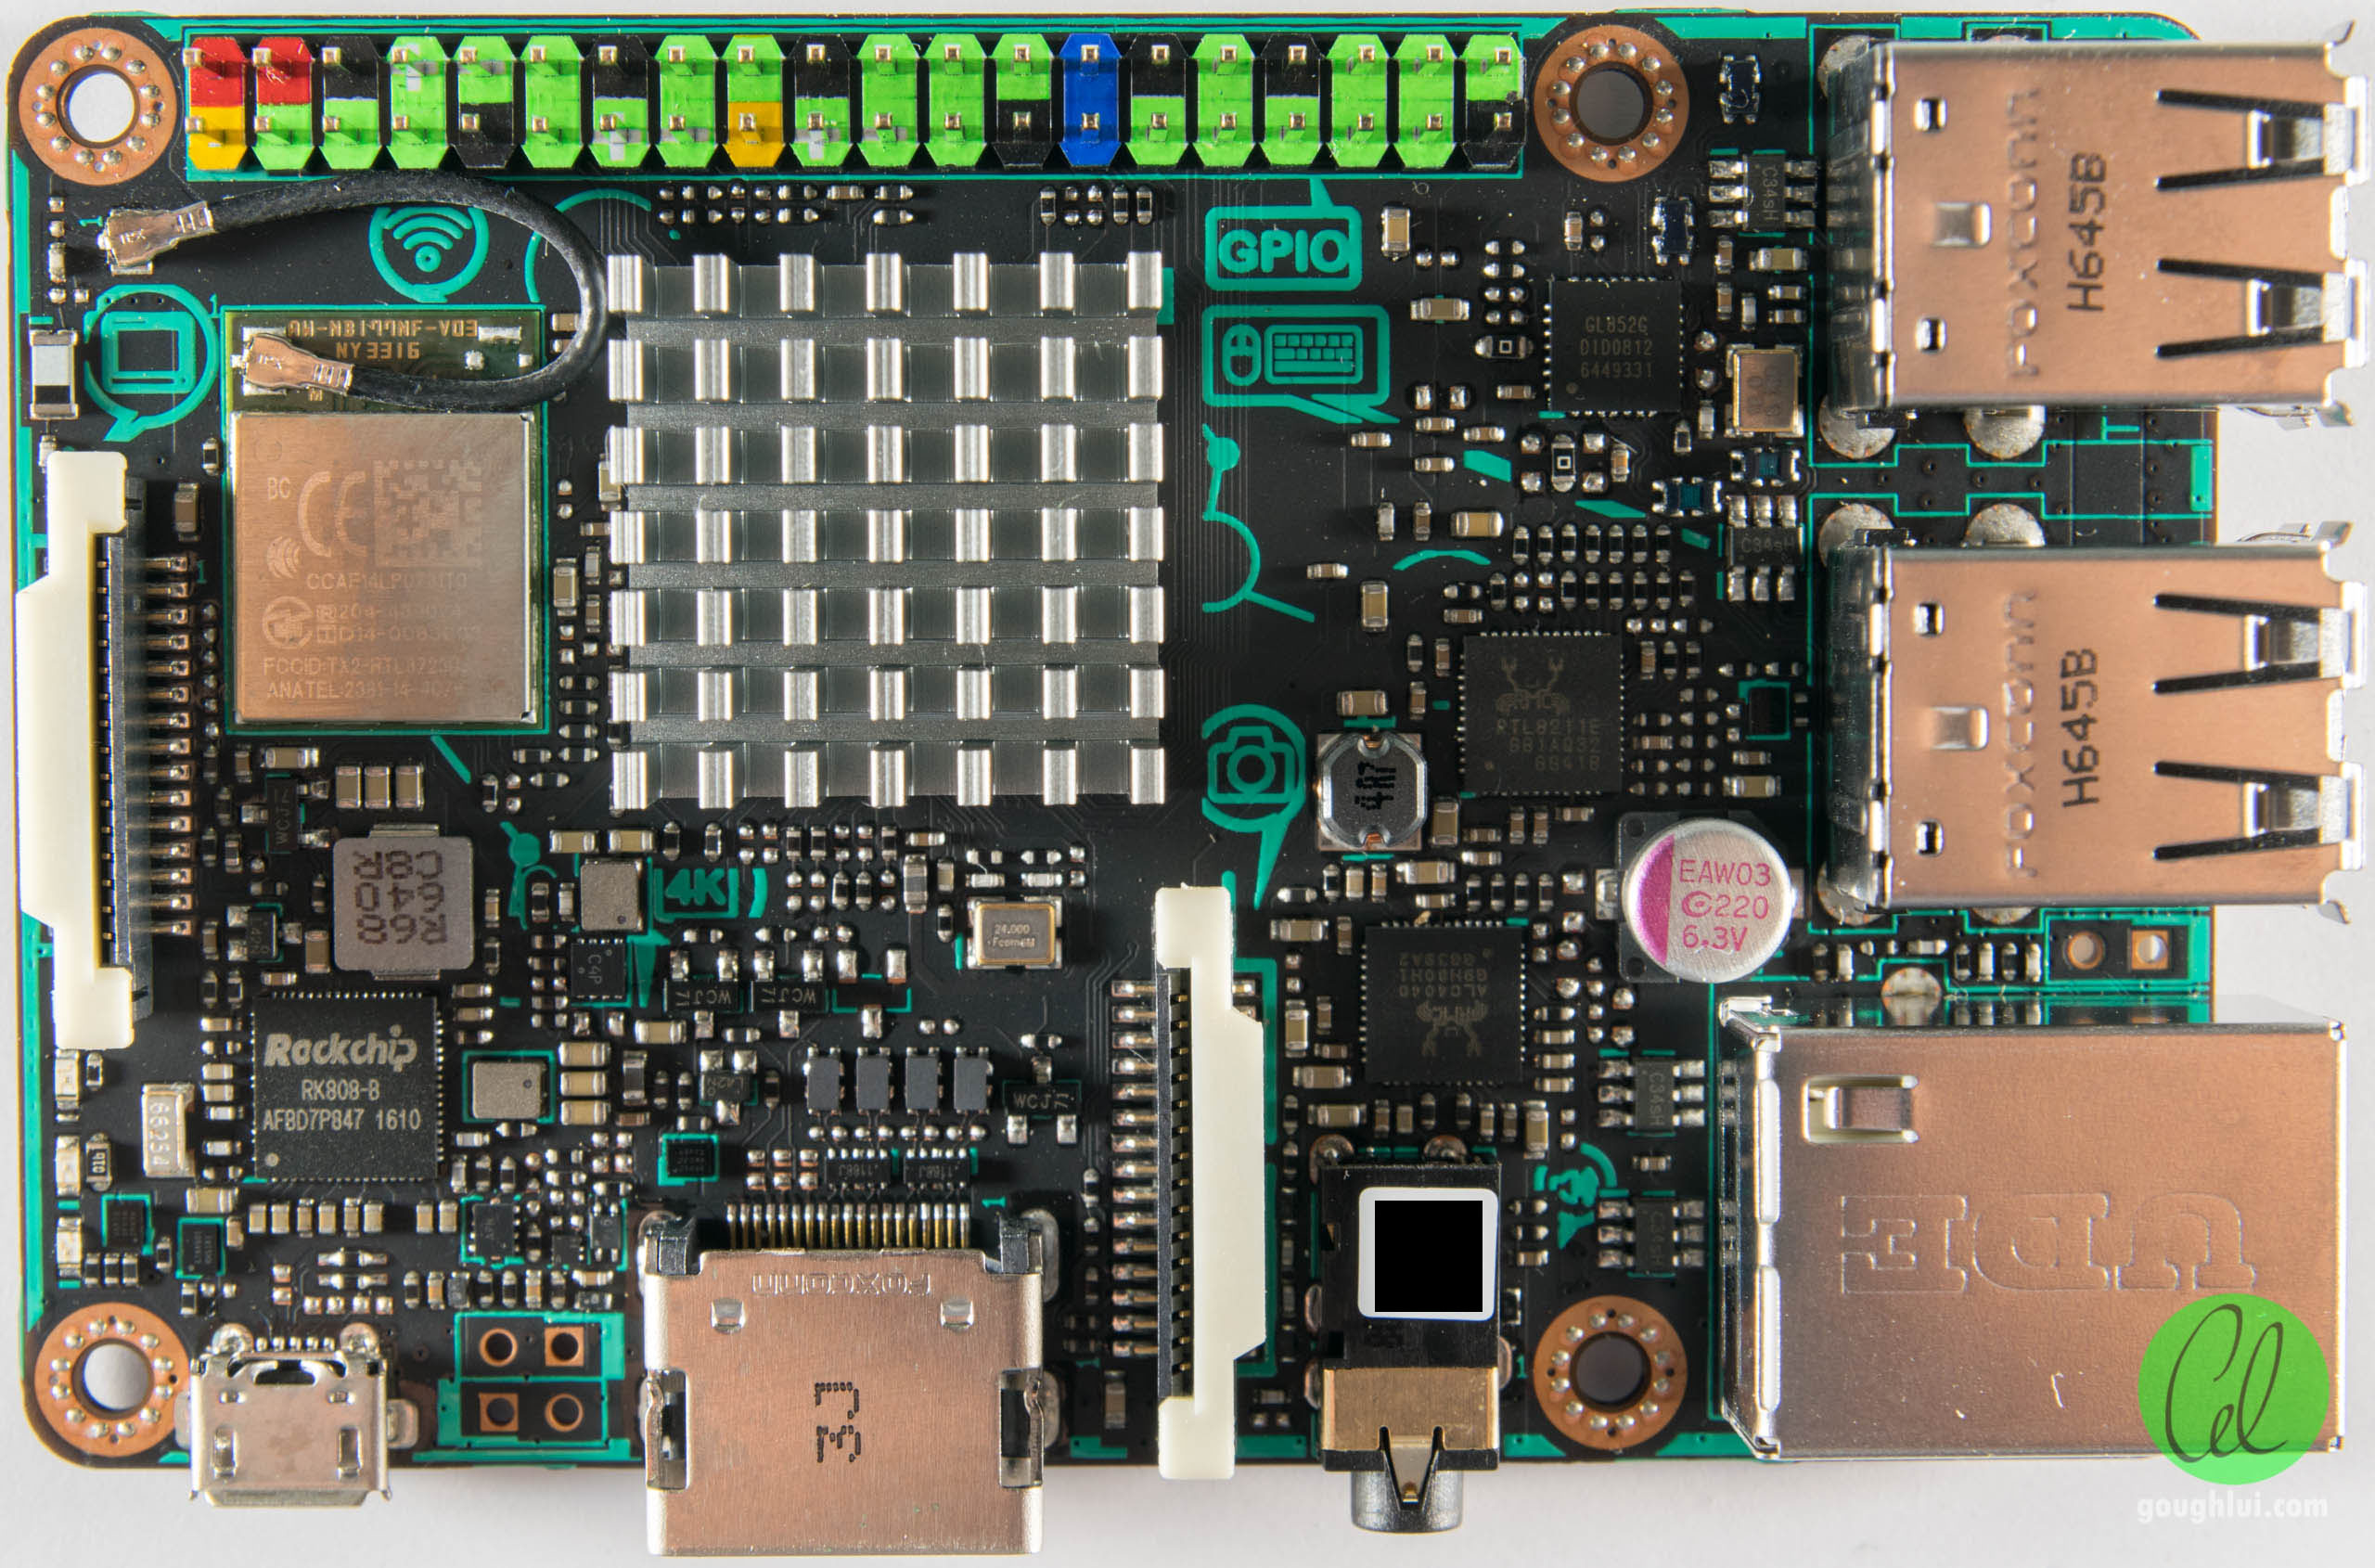 Asus tinker board. ASUS Tinker Board s. Bcm2711 soc Core. Raspberry Pi 3 model b v1.2 MICROSD. ASUS Tinker Board 2 радиатор.